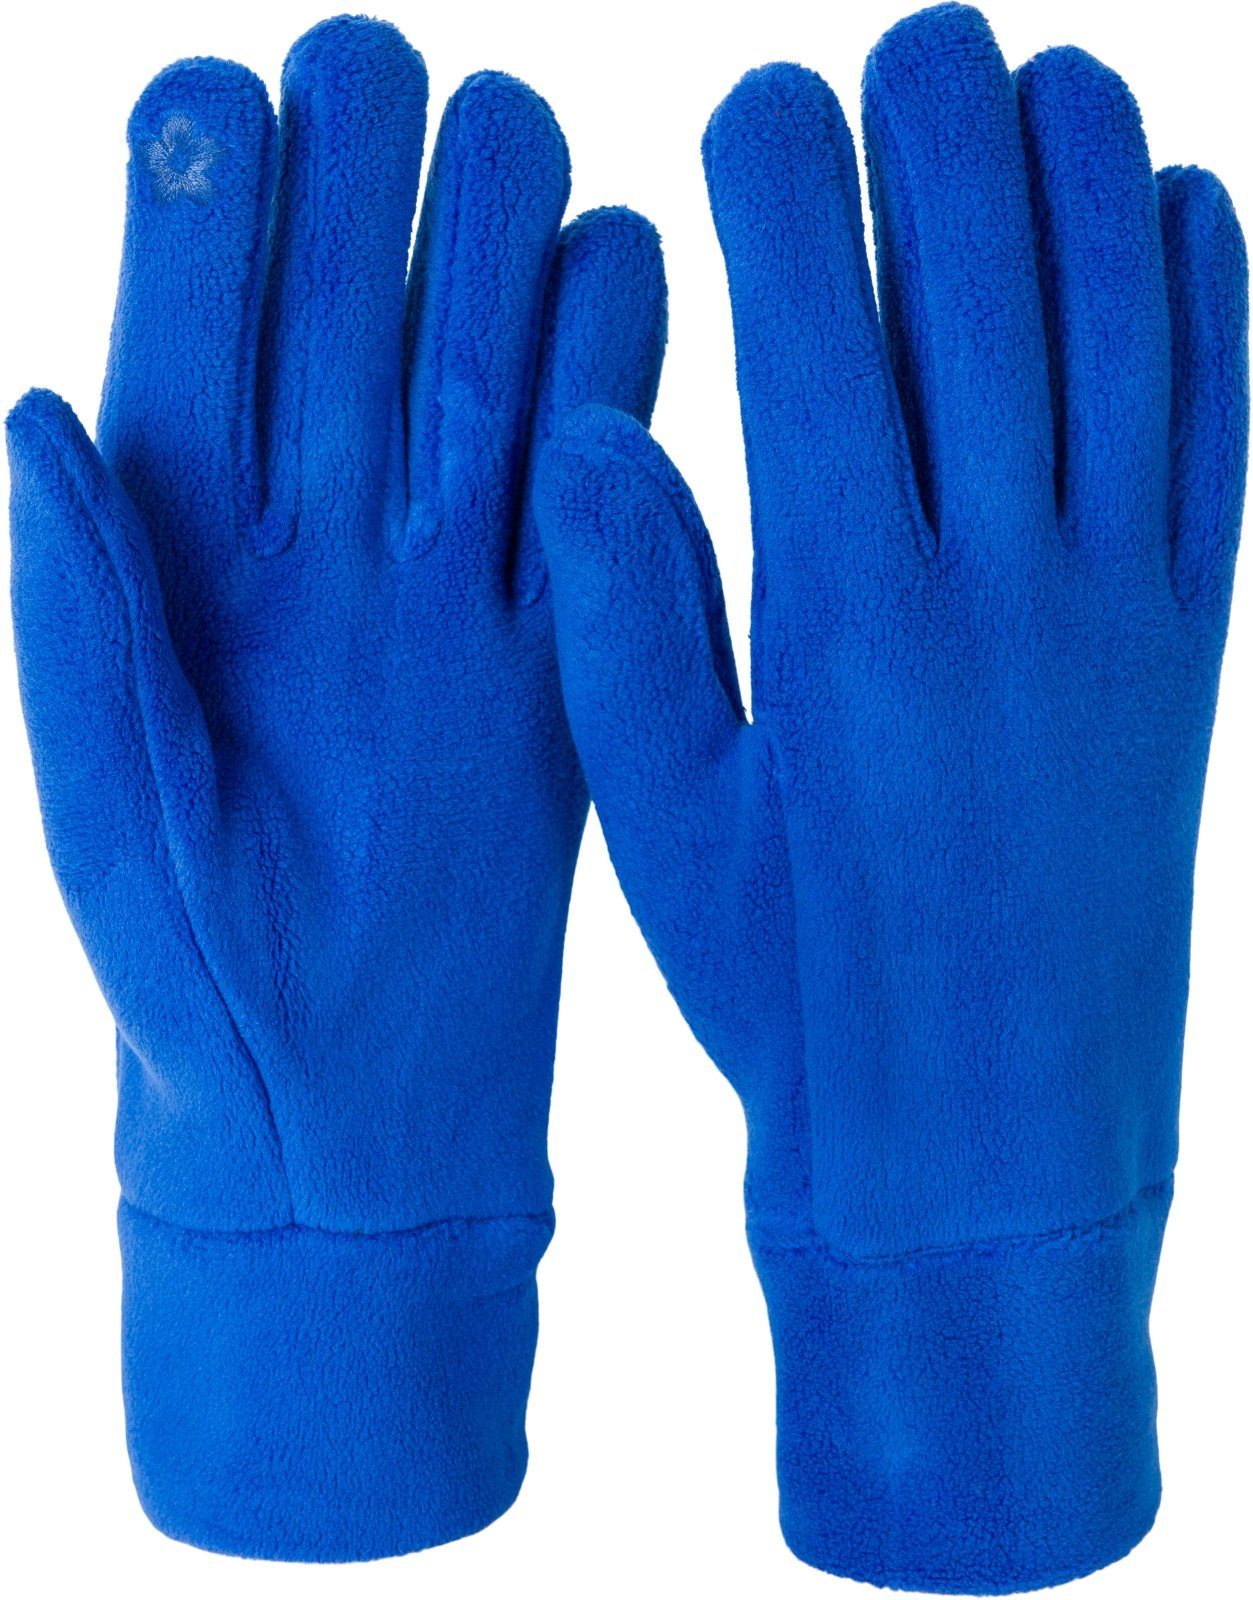 styleBREAKER Fleecehandschuhe Einfarbige Fleece Touchscreen Handschuhe Royalblau